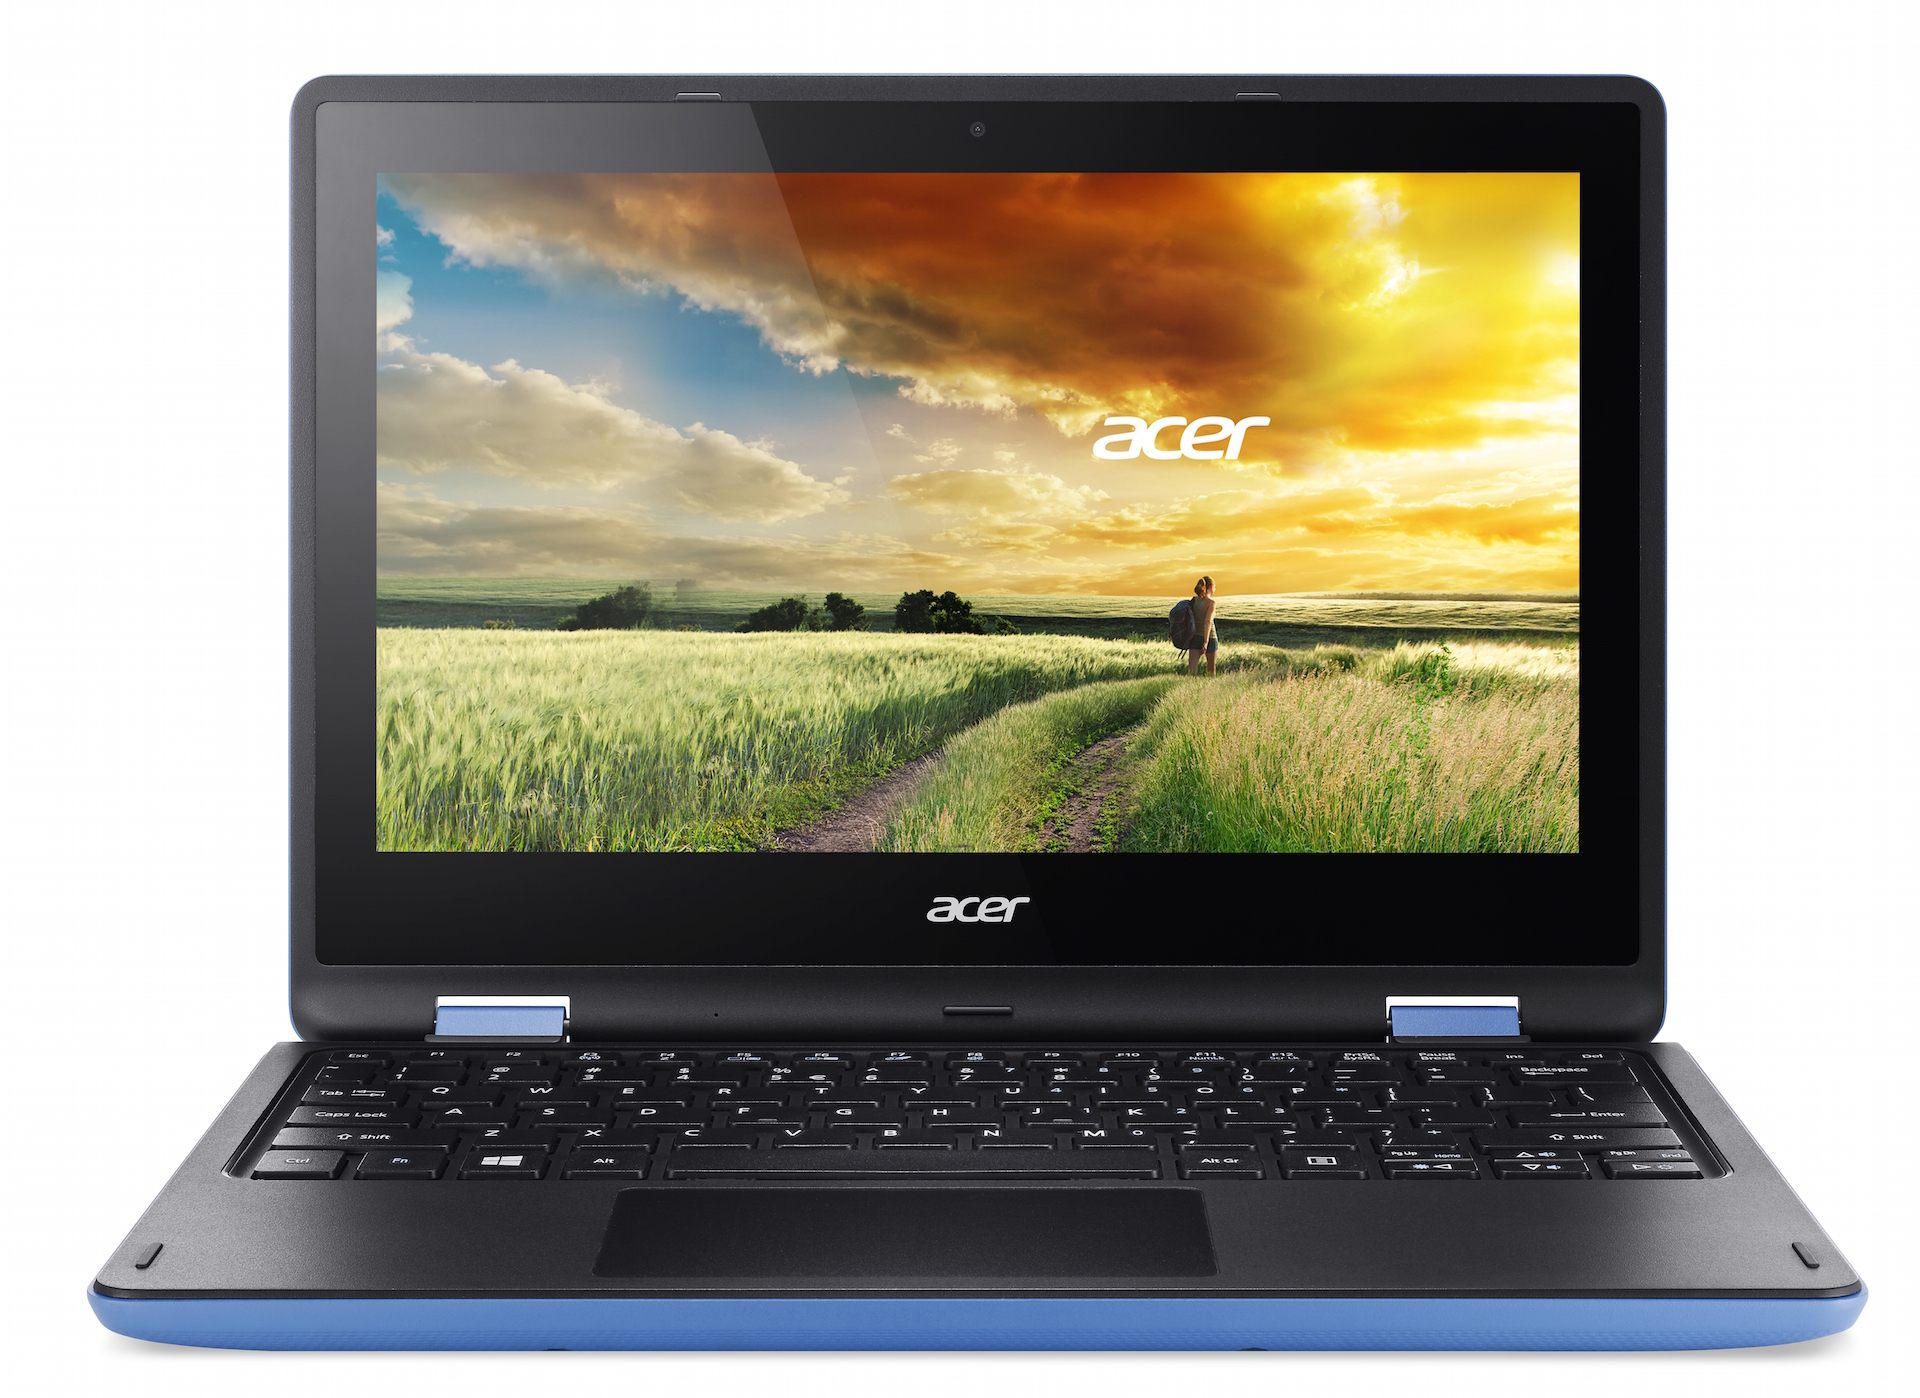 Acer es series 3 plus aes103. Ноутбук Acer Aspire r3-131t-c81r (NX. G11er.006). Acer Aspire r3-131t-c81r (NX. G11er.006). Acer Aspire r3-131t-c81r. Ноутбук Aspire r3-131t-c81r (NX.g11er.006).